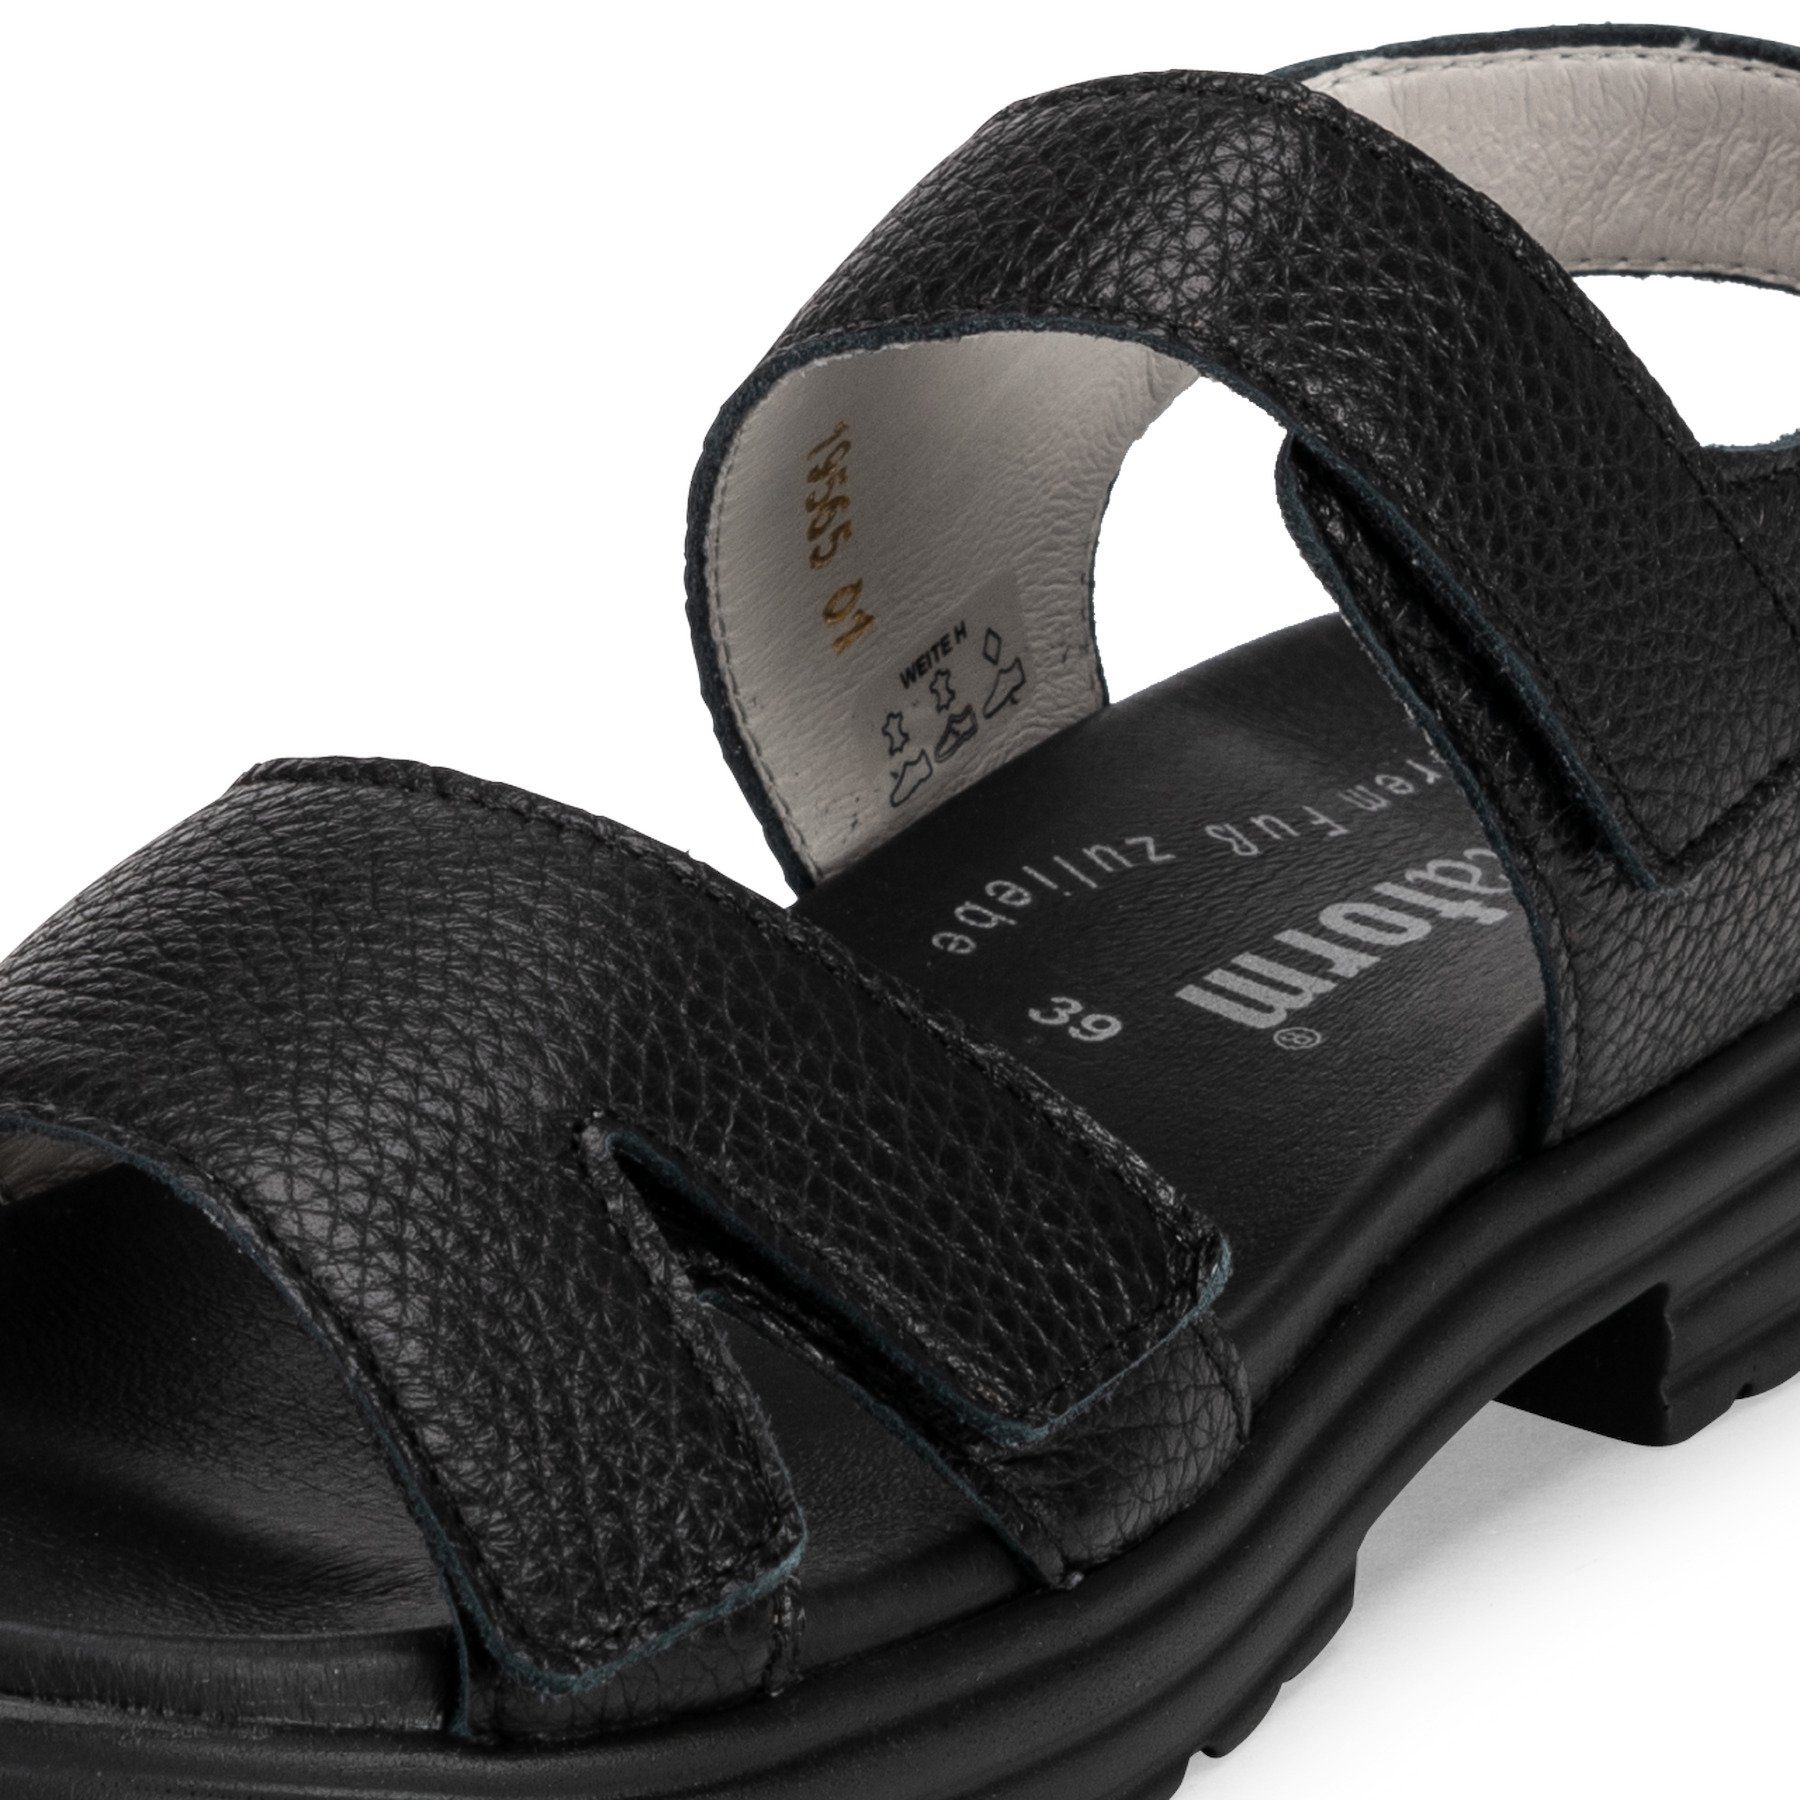 Sandale Sandale Damenschuhe schwarz Hirschleder vitaform